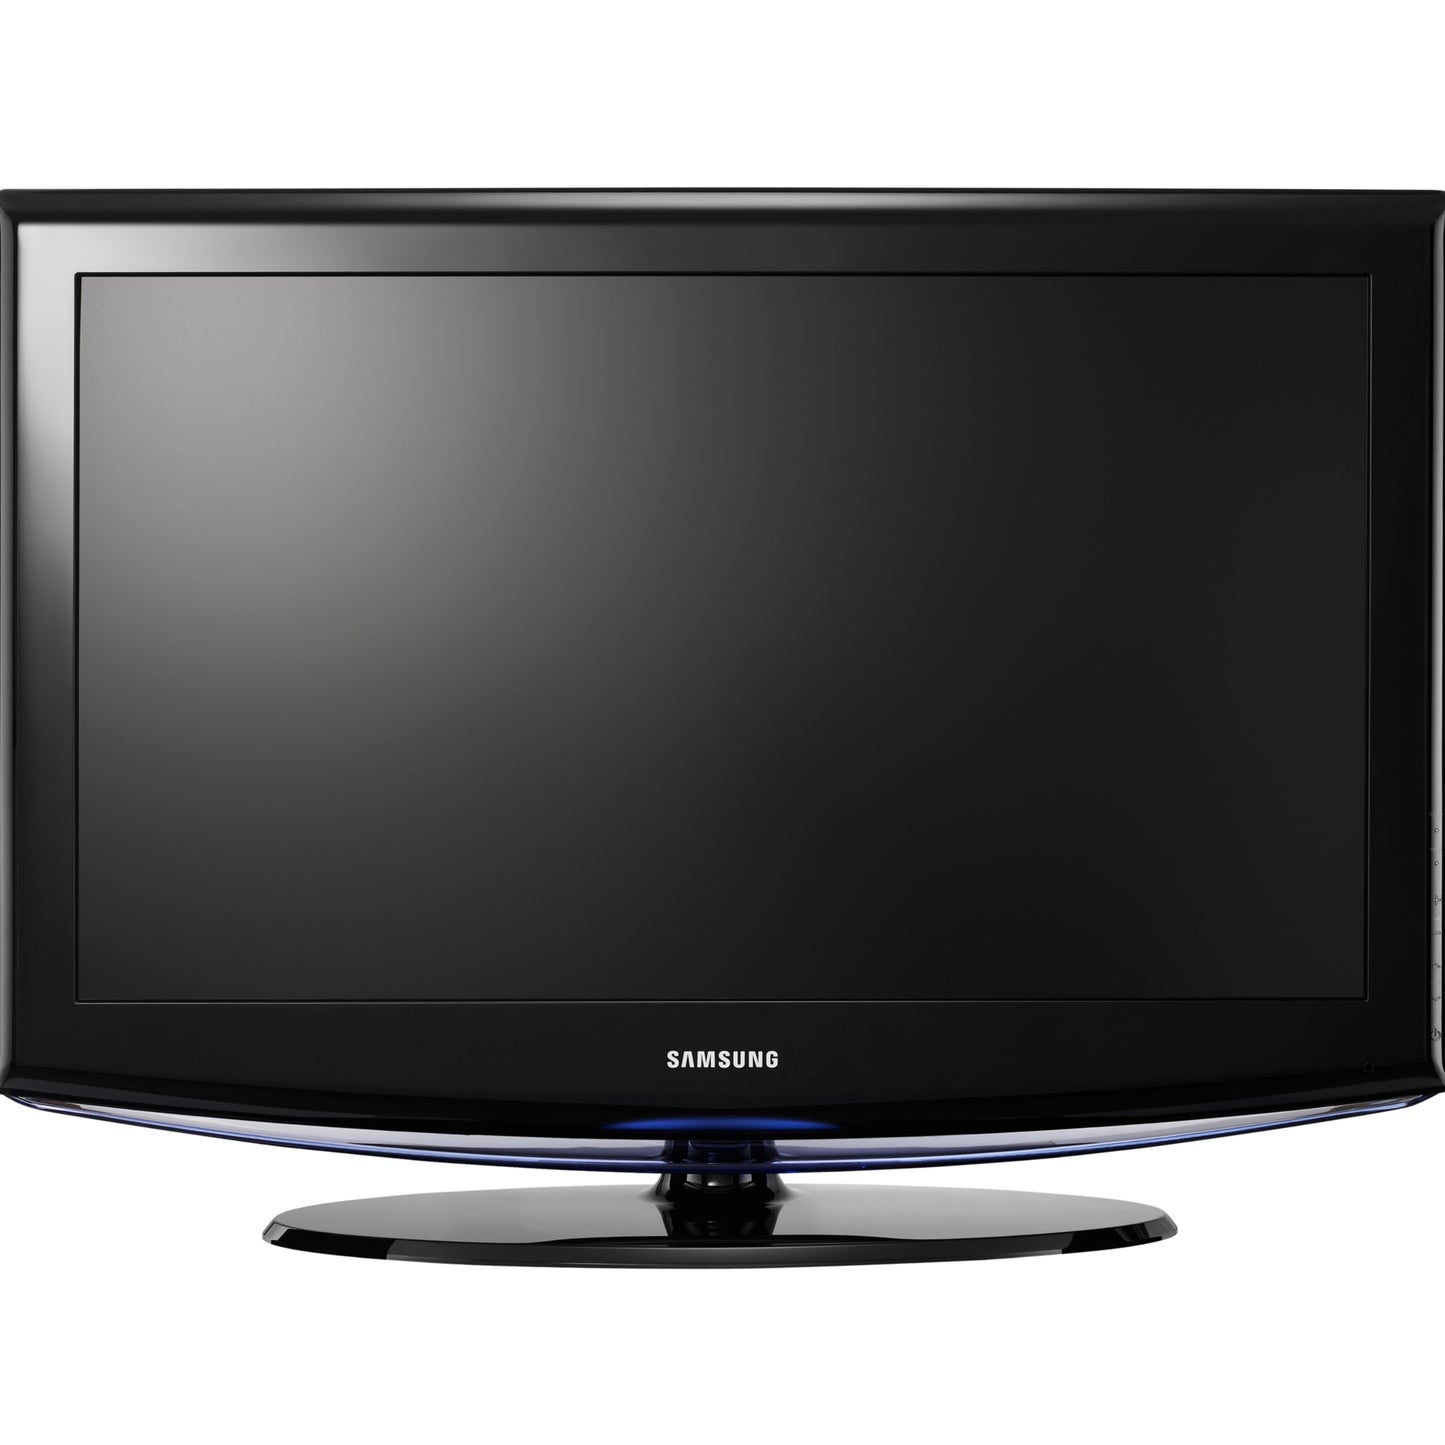 SAMSUNG 26 Inch LE26R88BD HD Ready LCD TV - UK Used